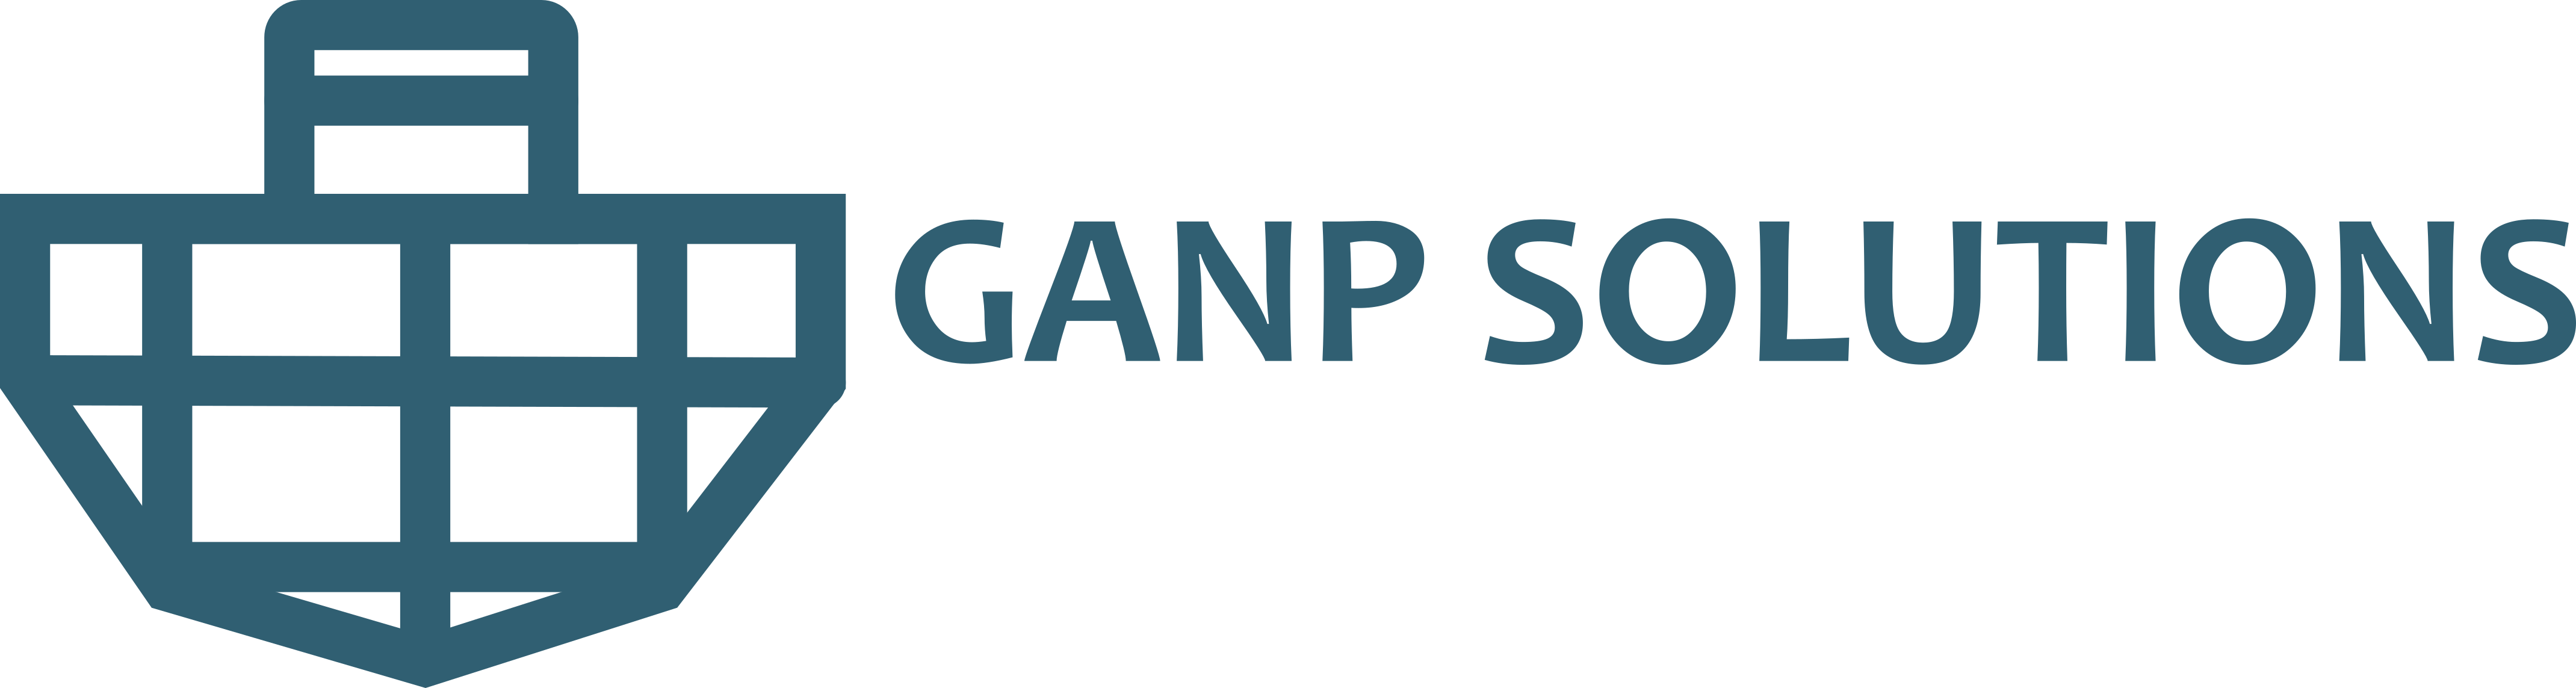 GANP Solutions